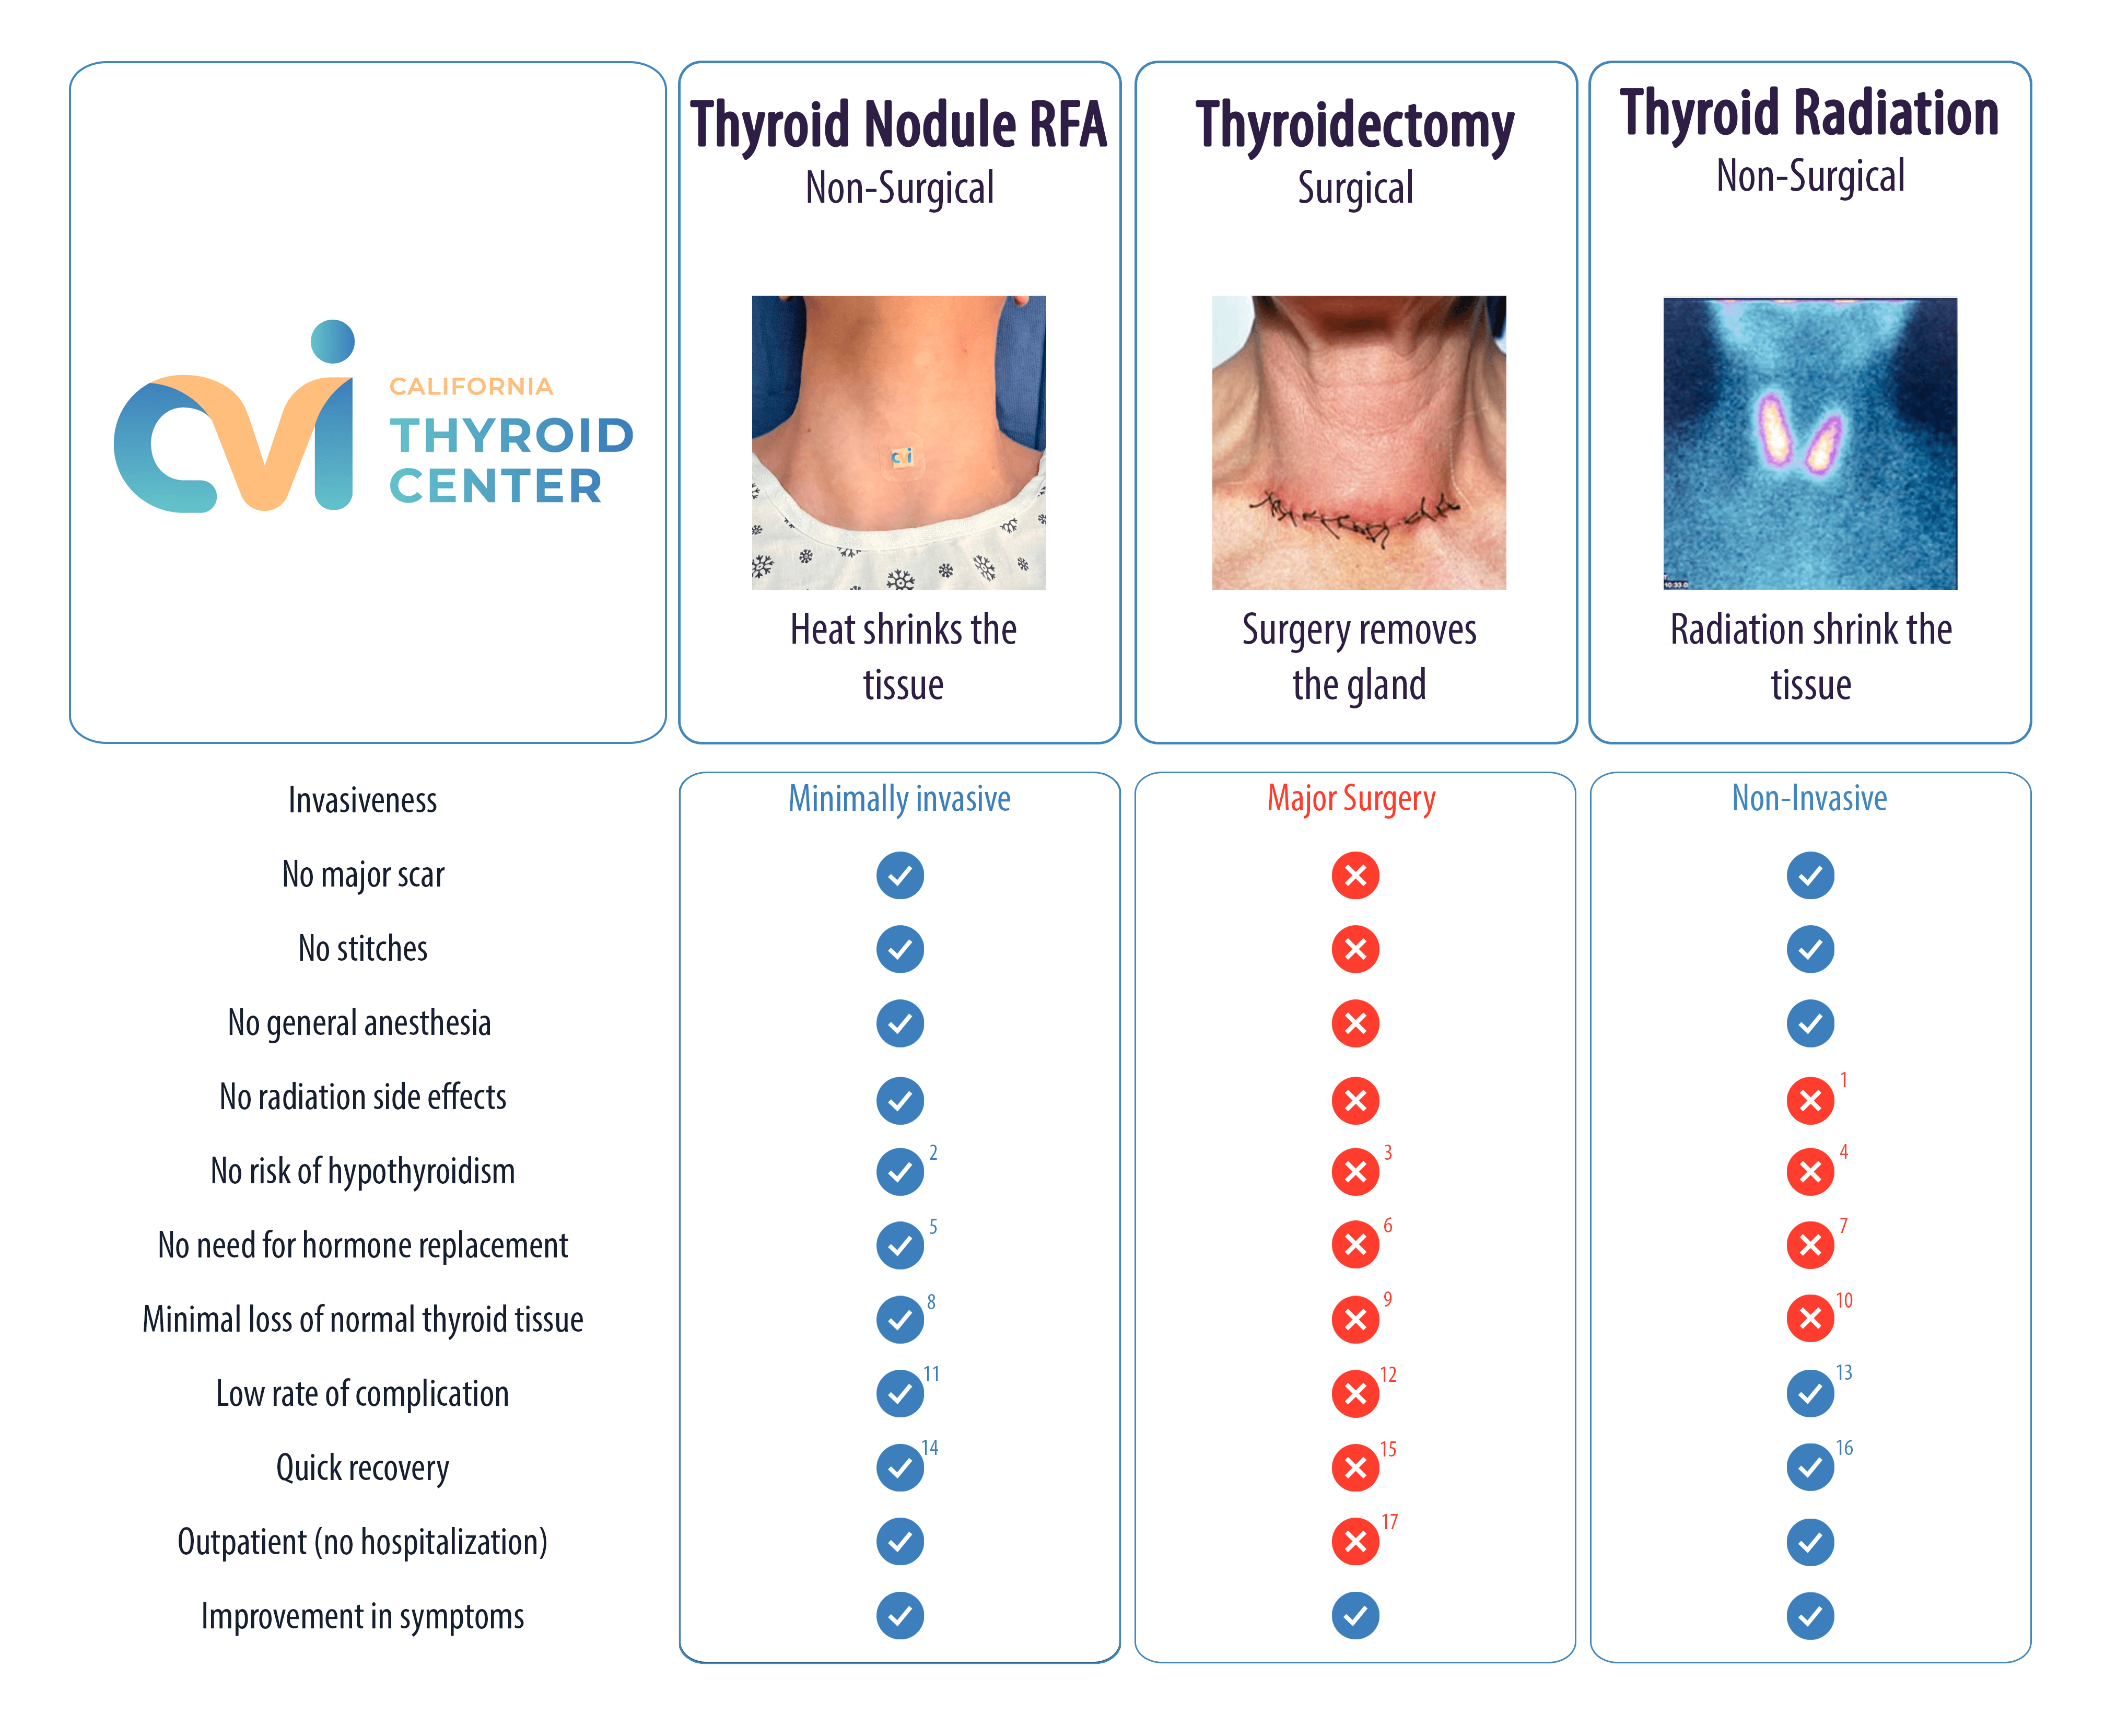 comparsion chart of throid nodule rfa, thyroidectomy, thyroid radiation